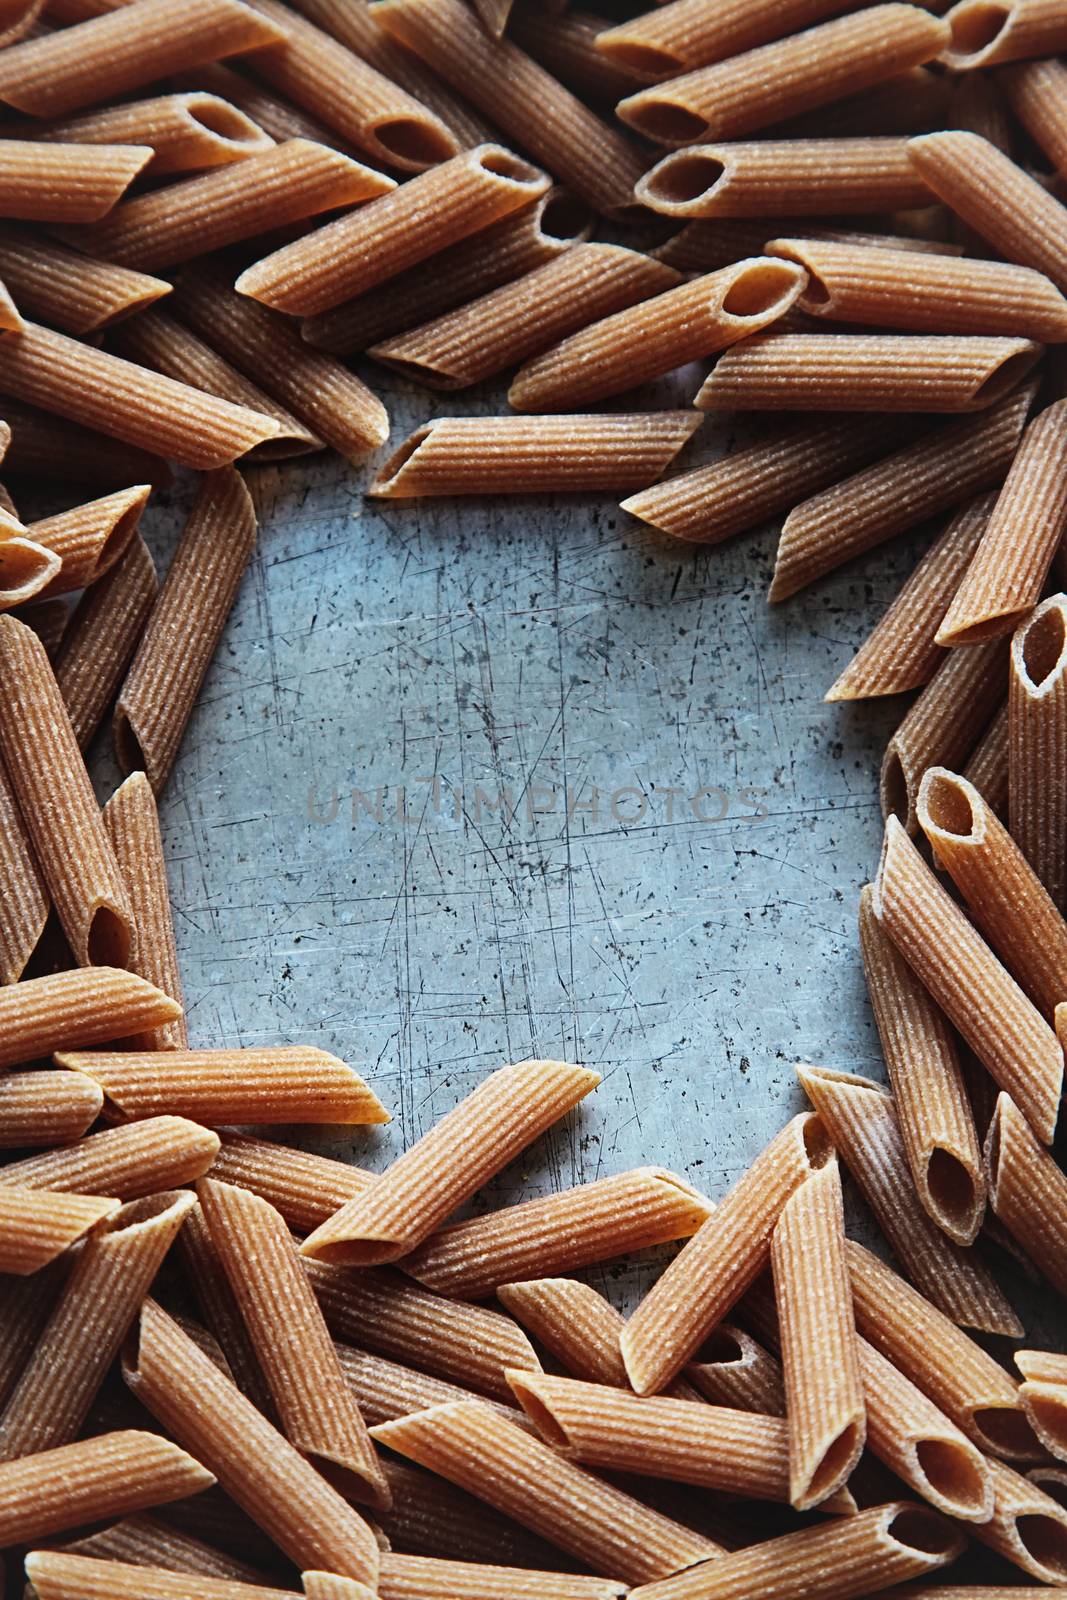 Dry pasta on aluminum by Sandralise